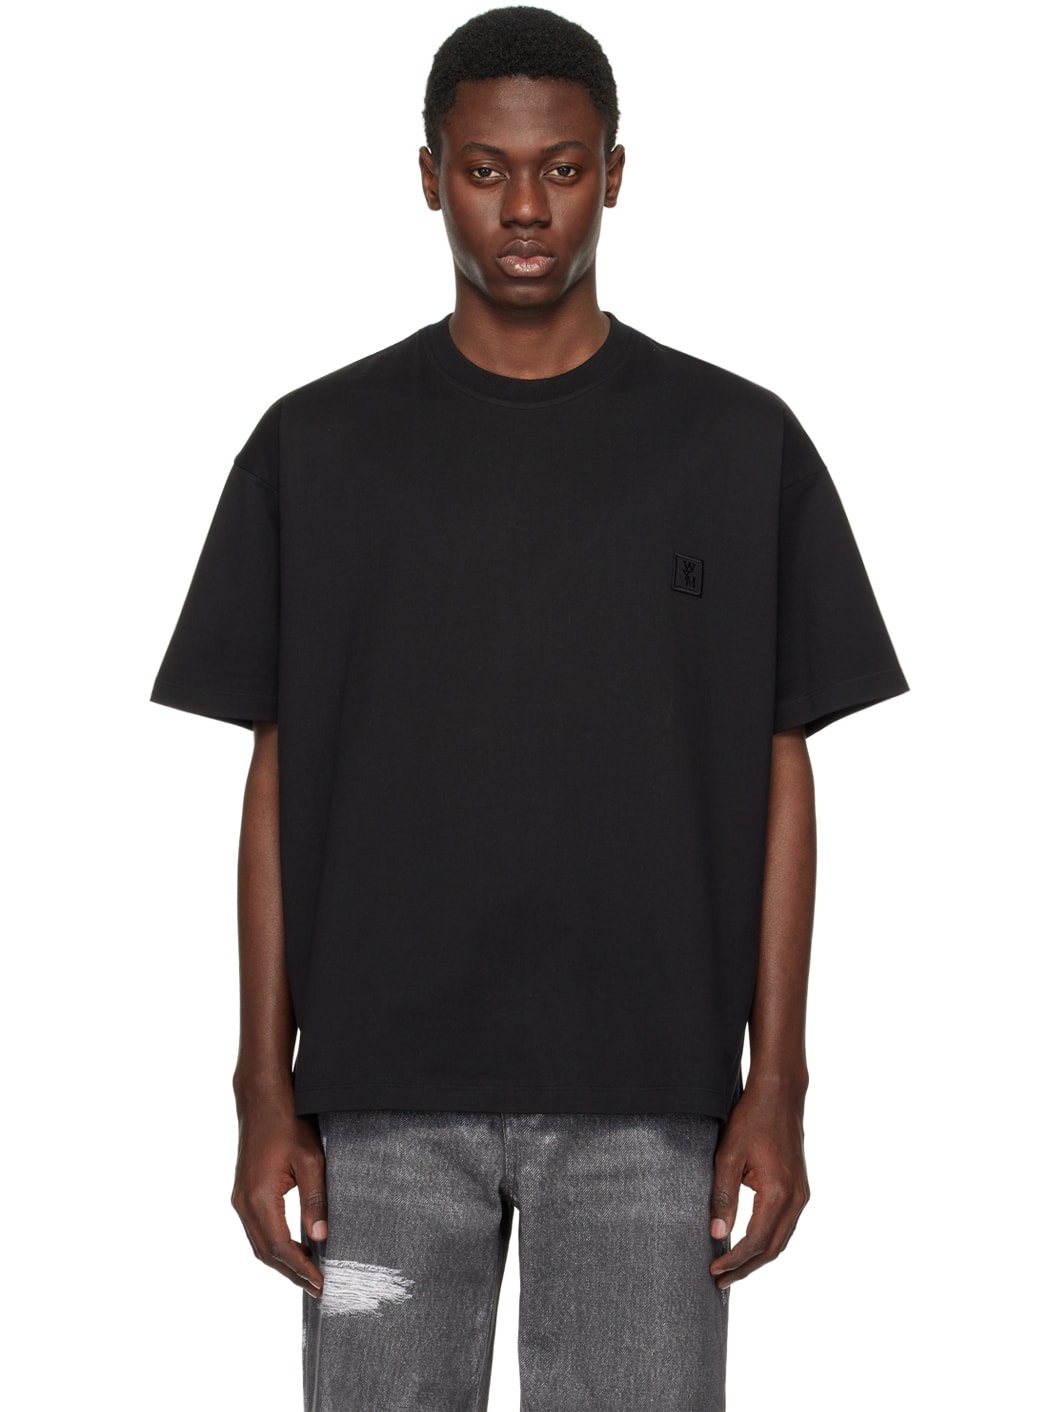 Black Printed T-Shirt - 1